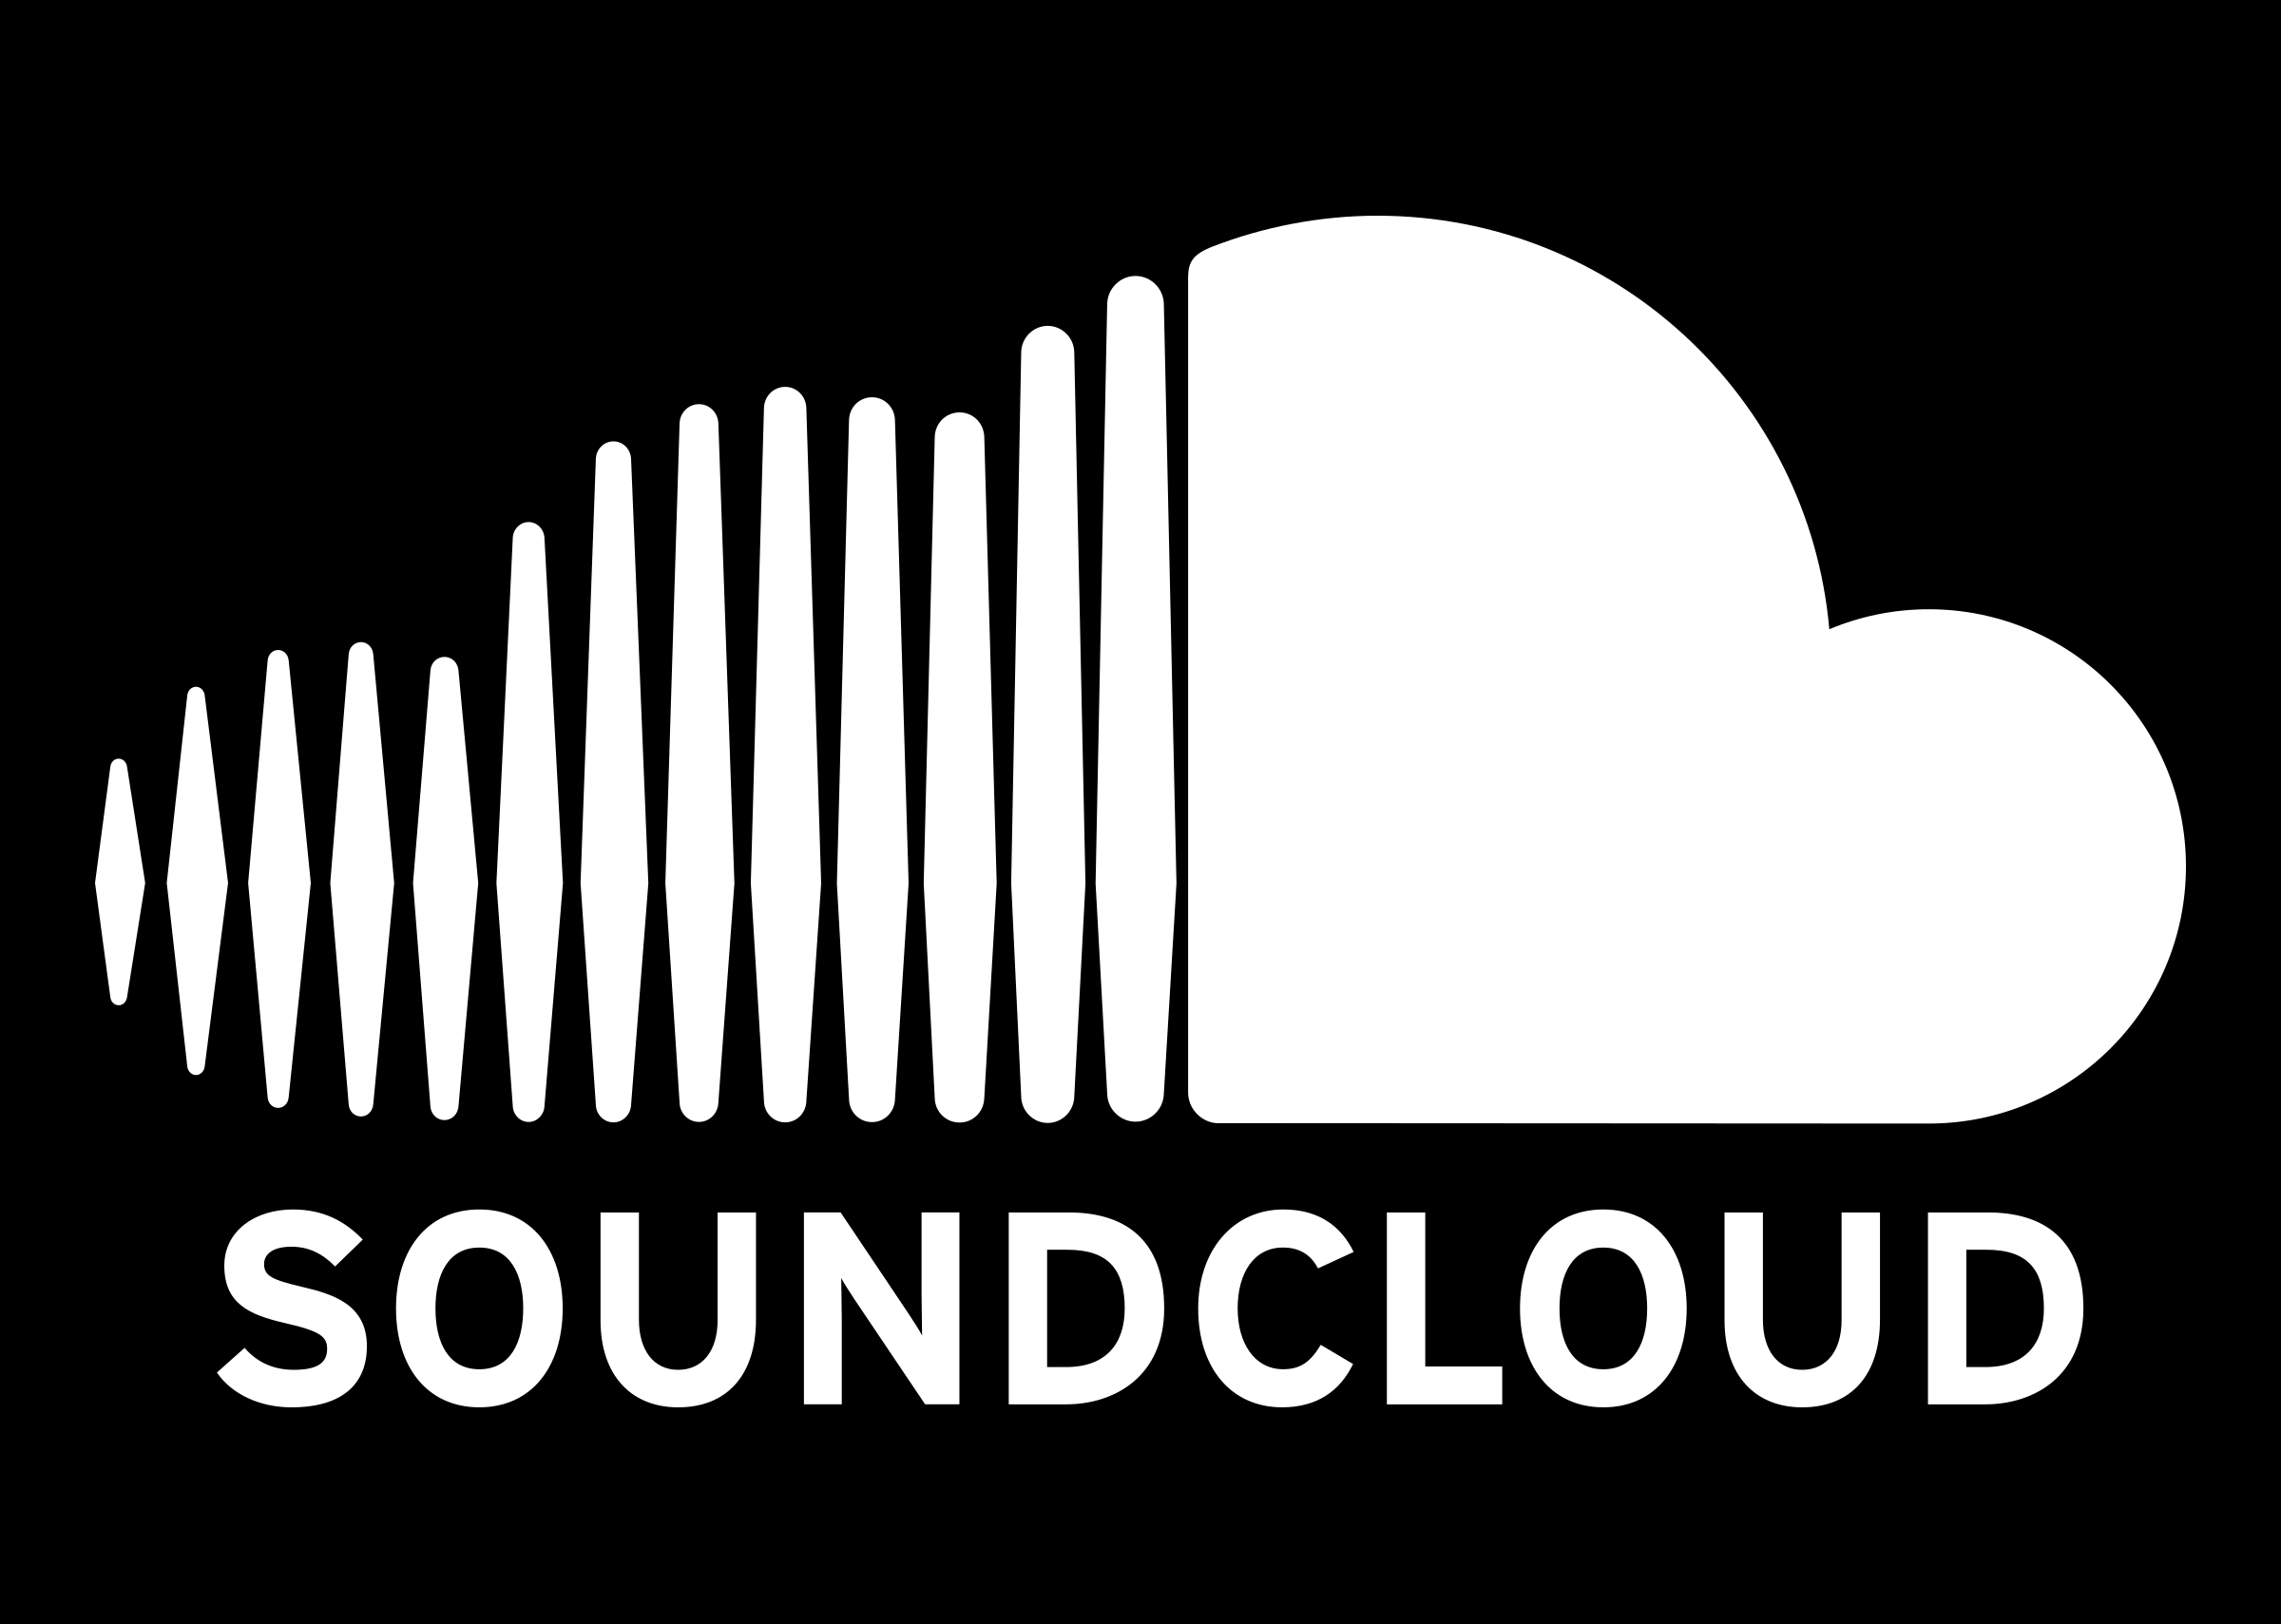 Soundcloud.com Logo - SoundCloud Logo PNG Transparent & SVG Vector - Freebie Supply